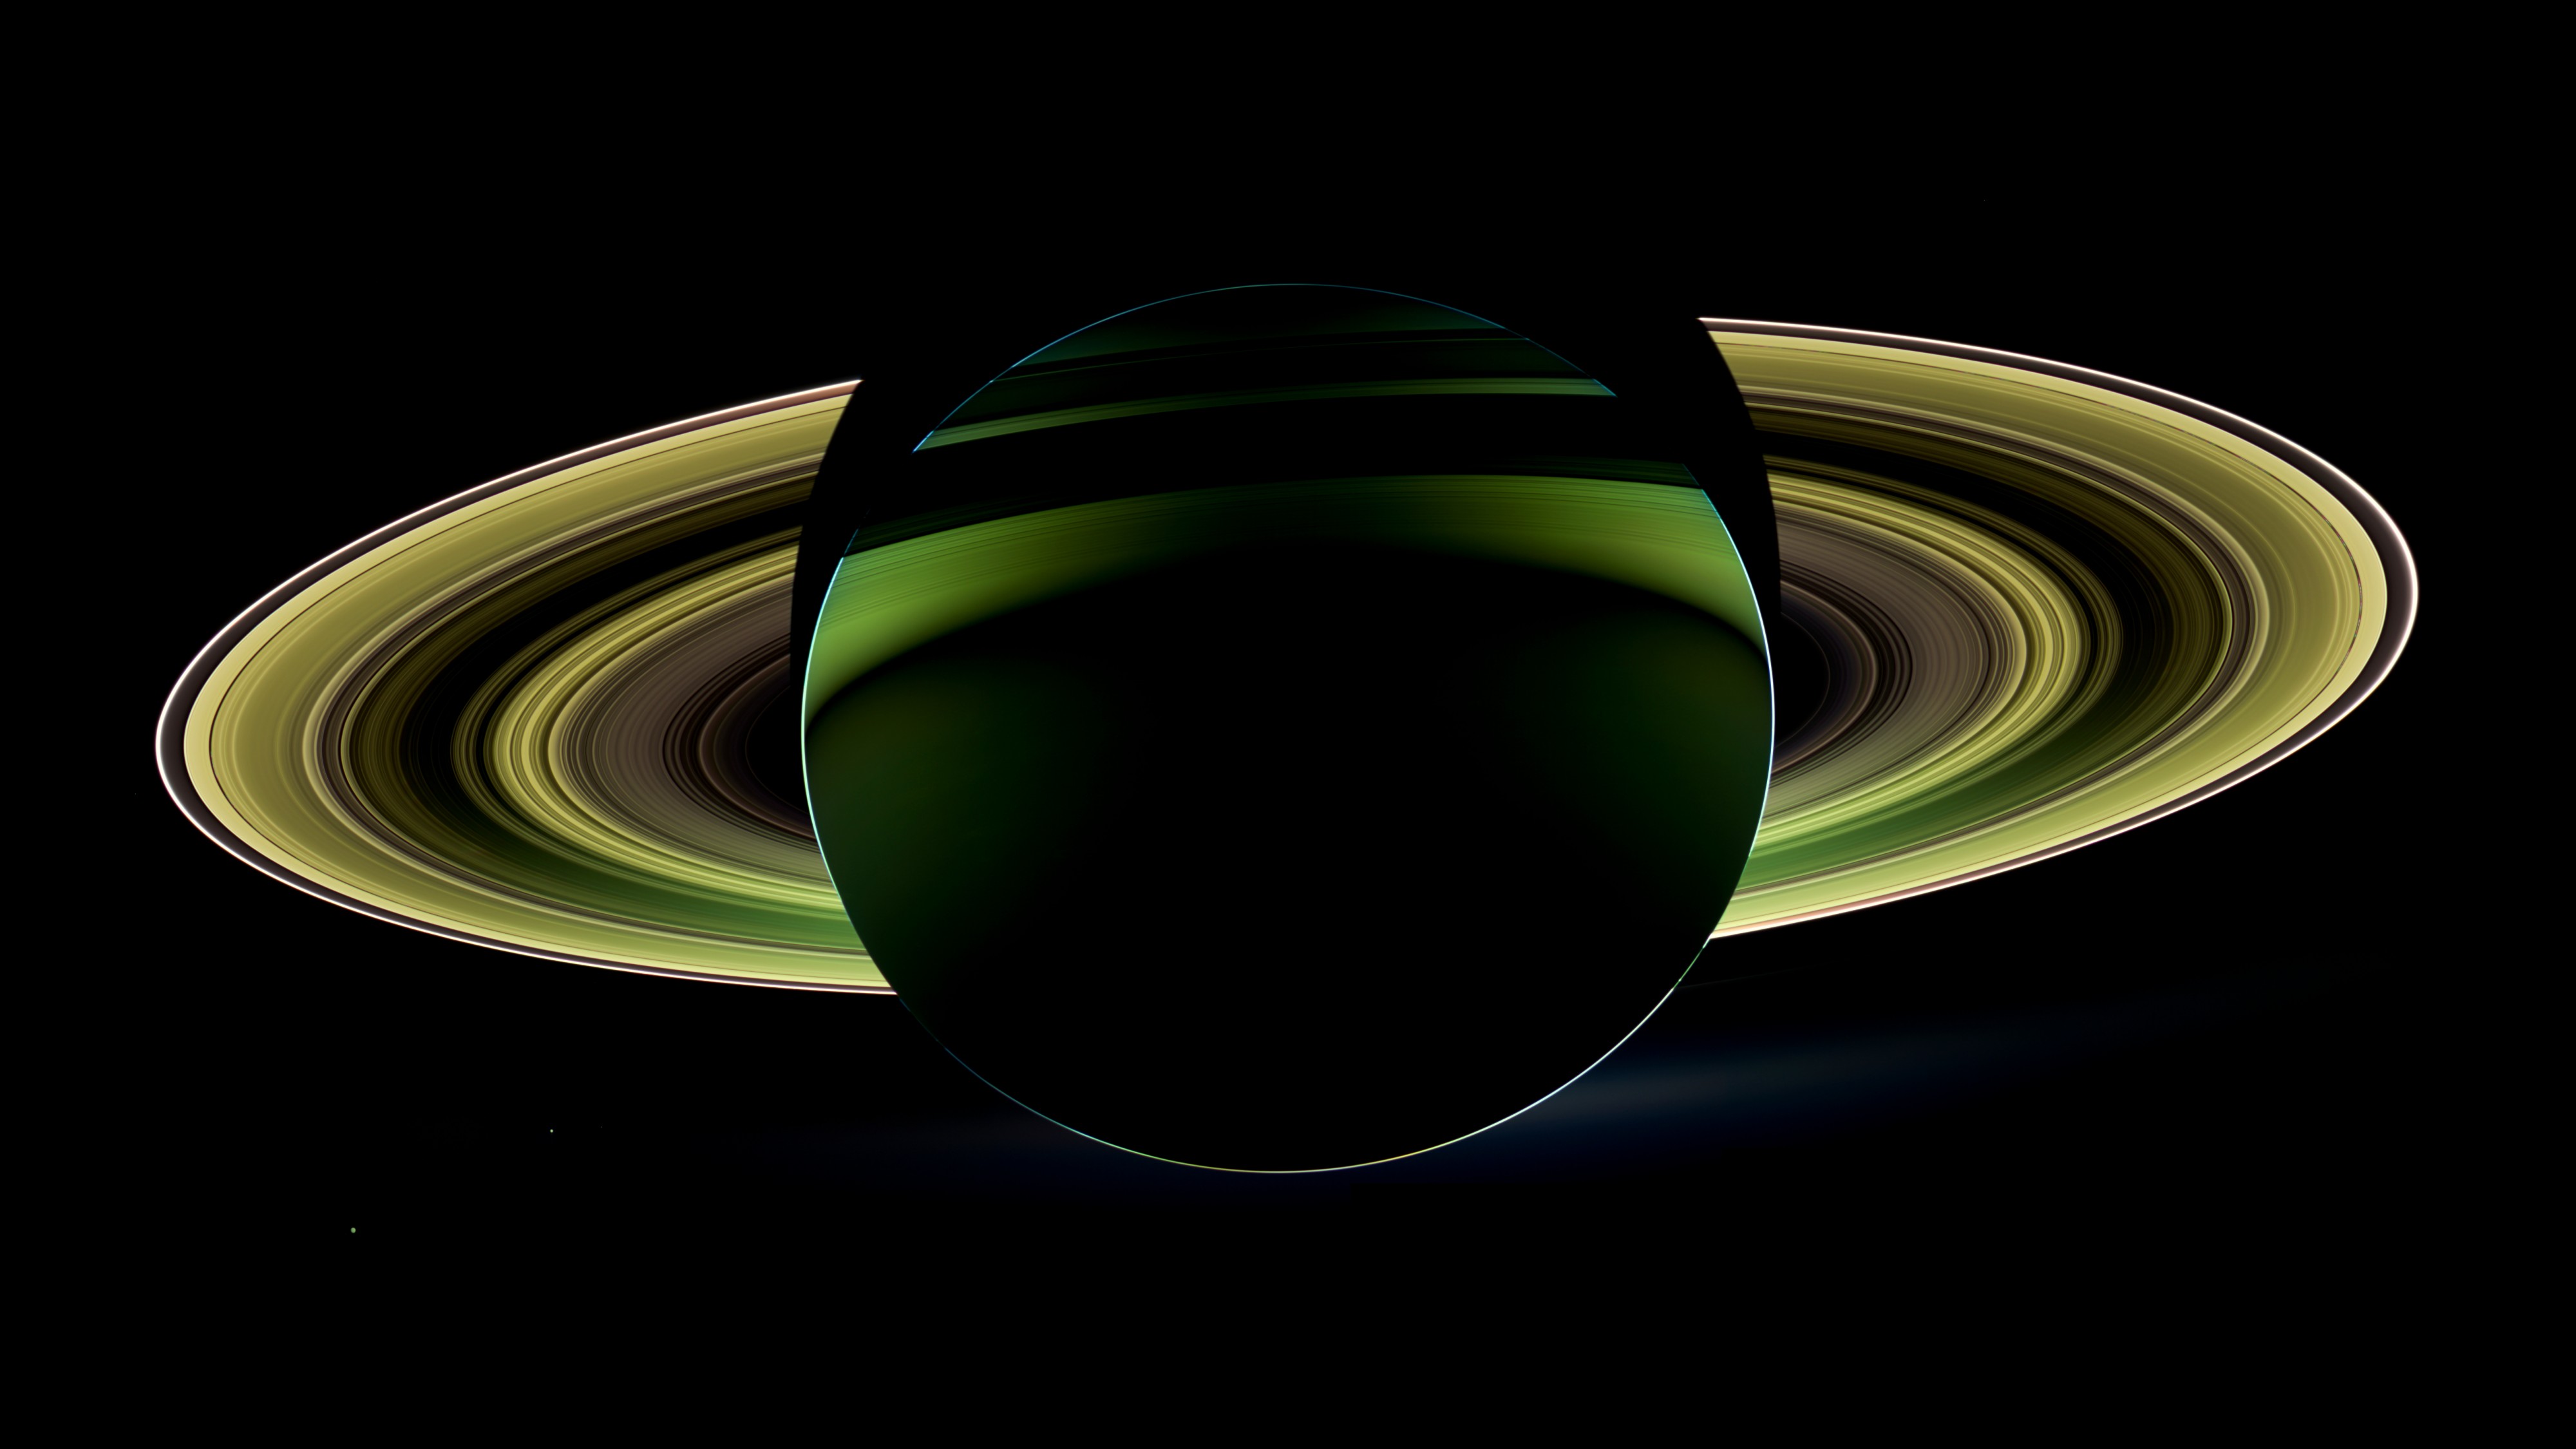 PIA14934 - A Splendor Seldom Seen - Saturn Cassini - high contrast